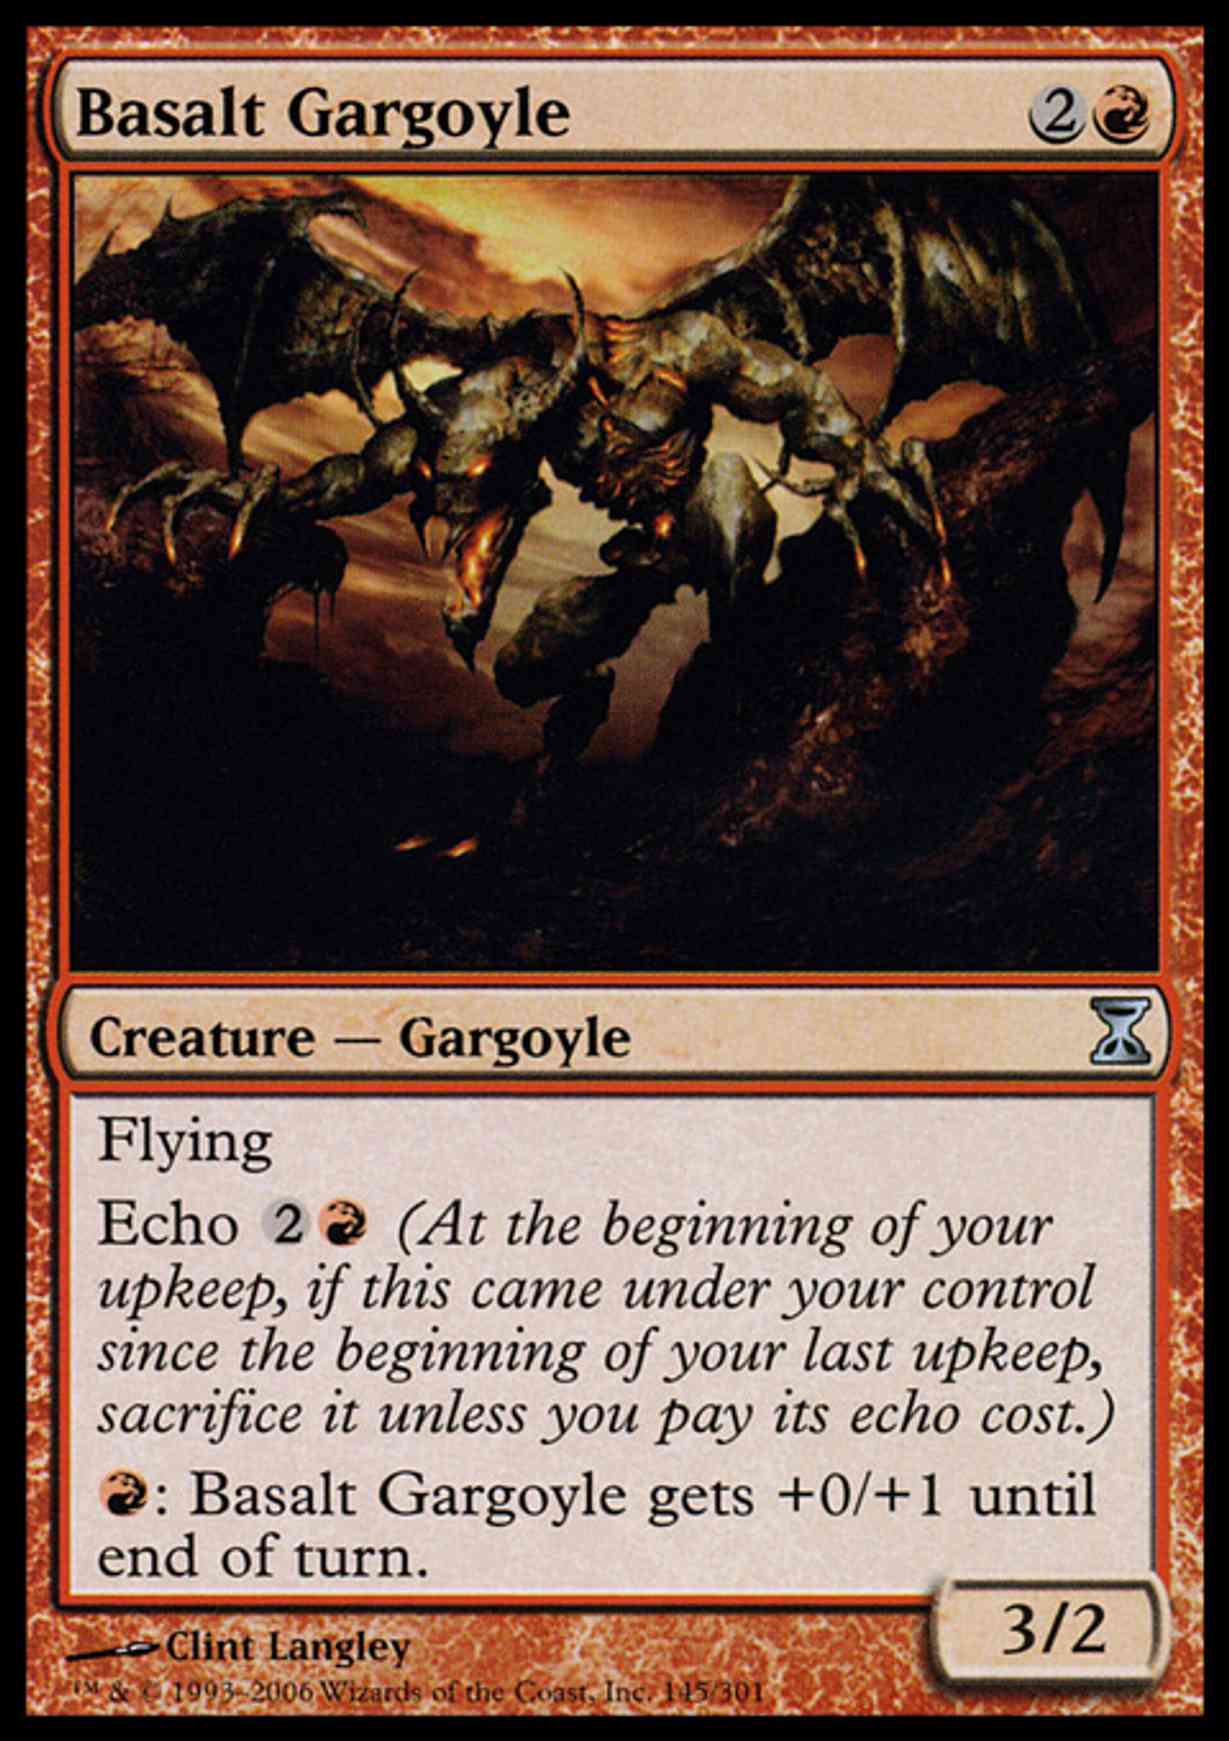 Basalt Gargoyle magic card front